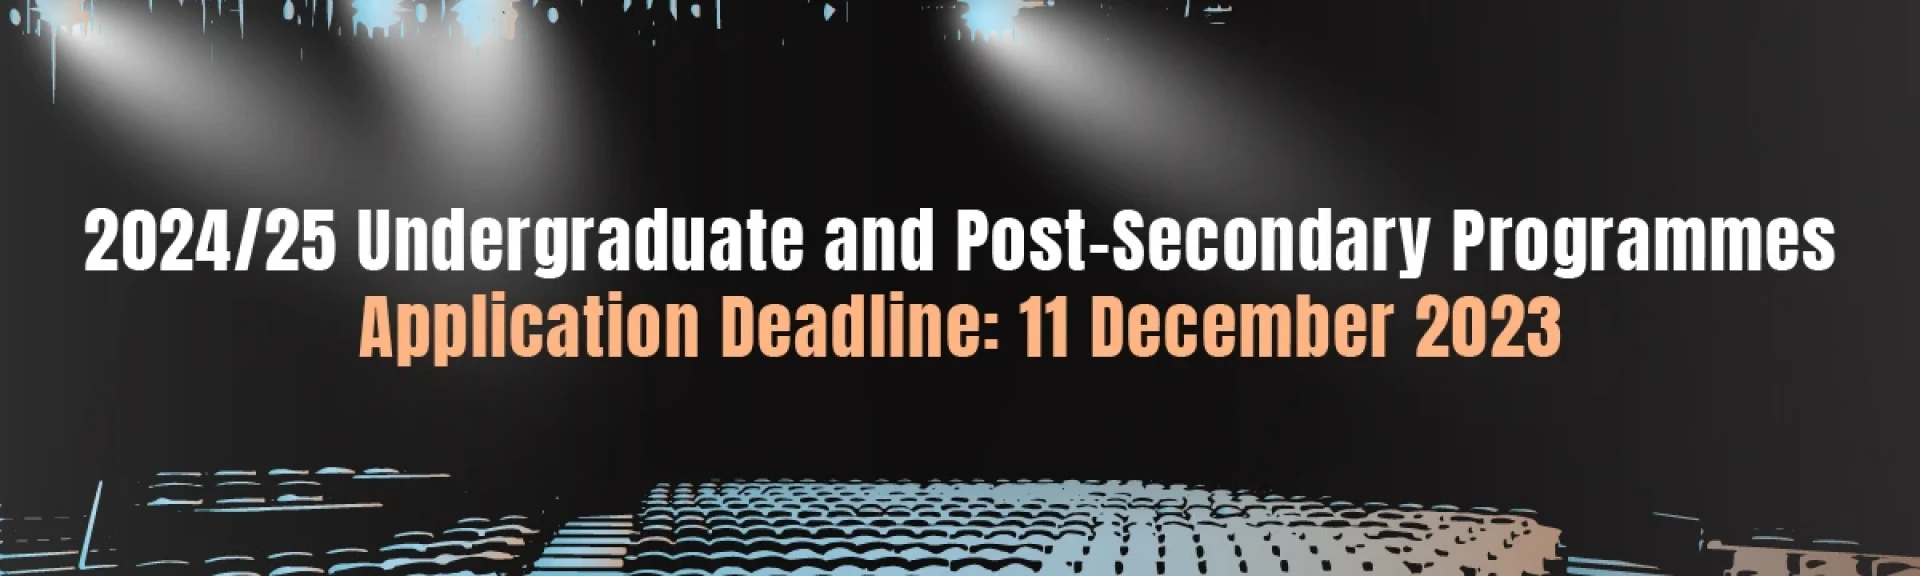 Application deadline for 2024-25 Undergraduate & Post-secondary Programmes is 11 Dec 2023